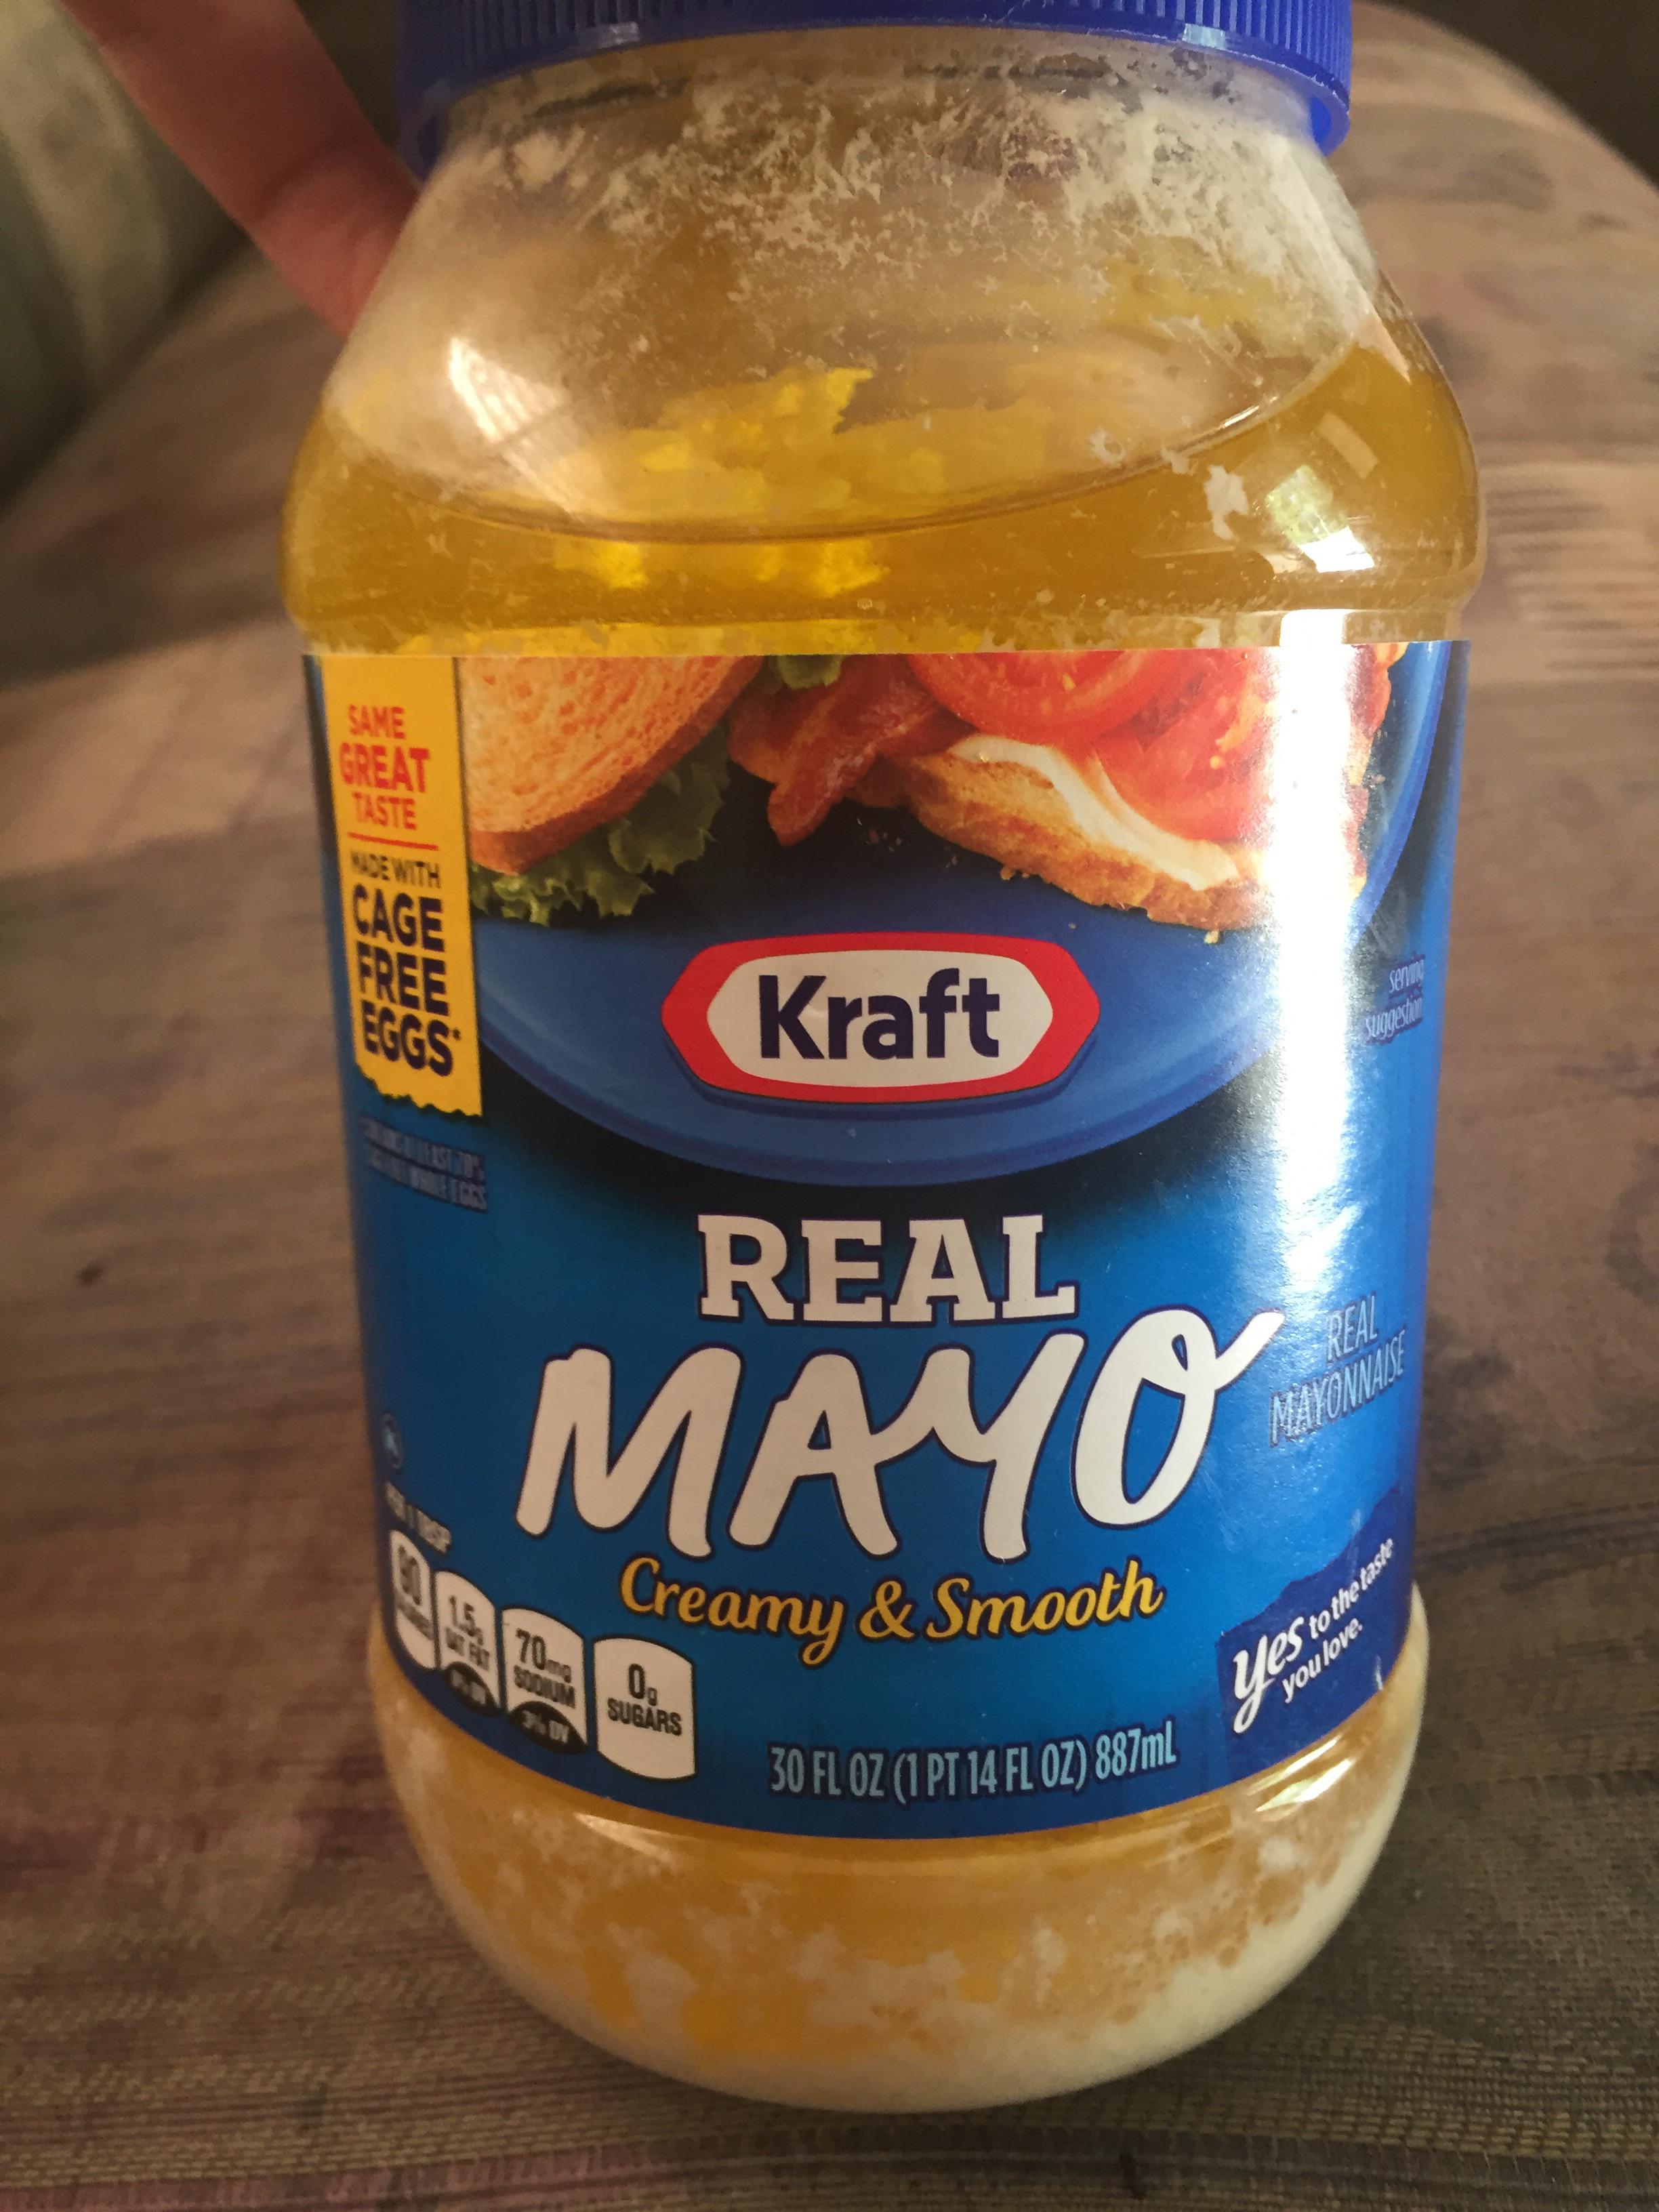 kraft foods - Kraft Real Mayo Creamy & Smooth 30 F Oz Pt 14R02837ml